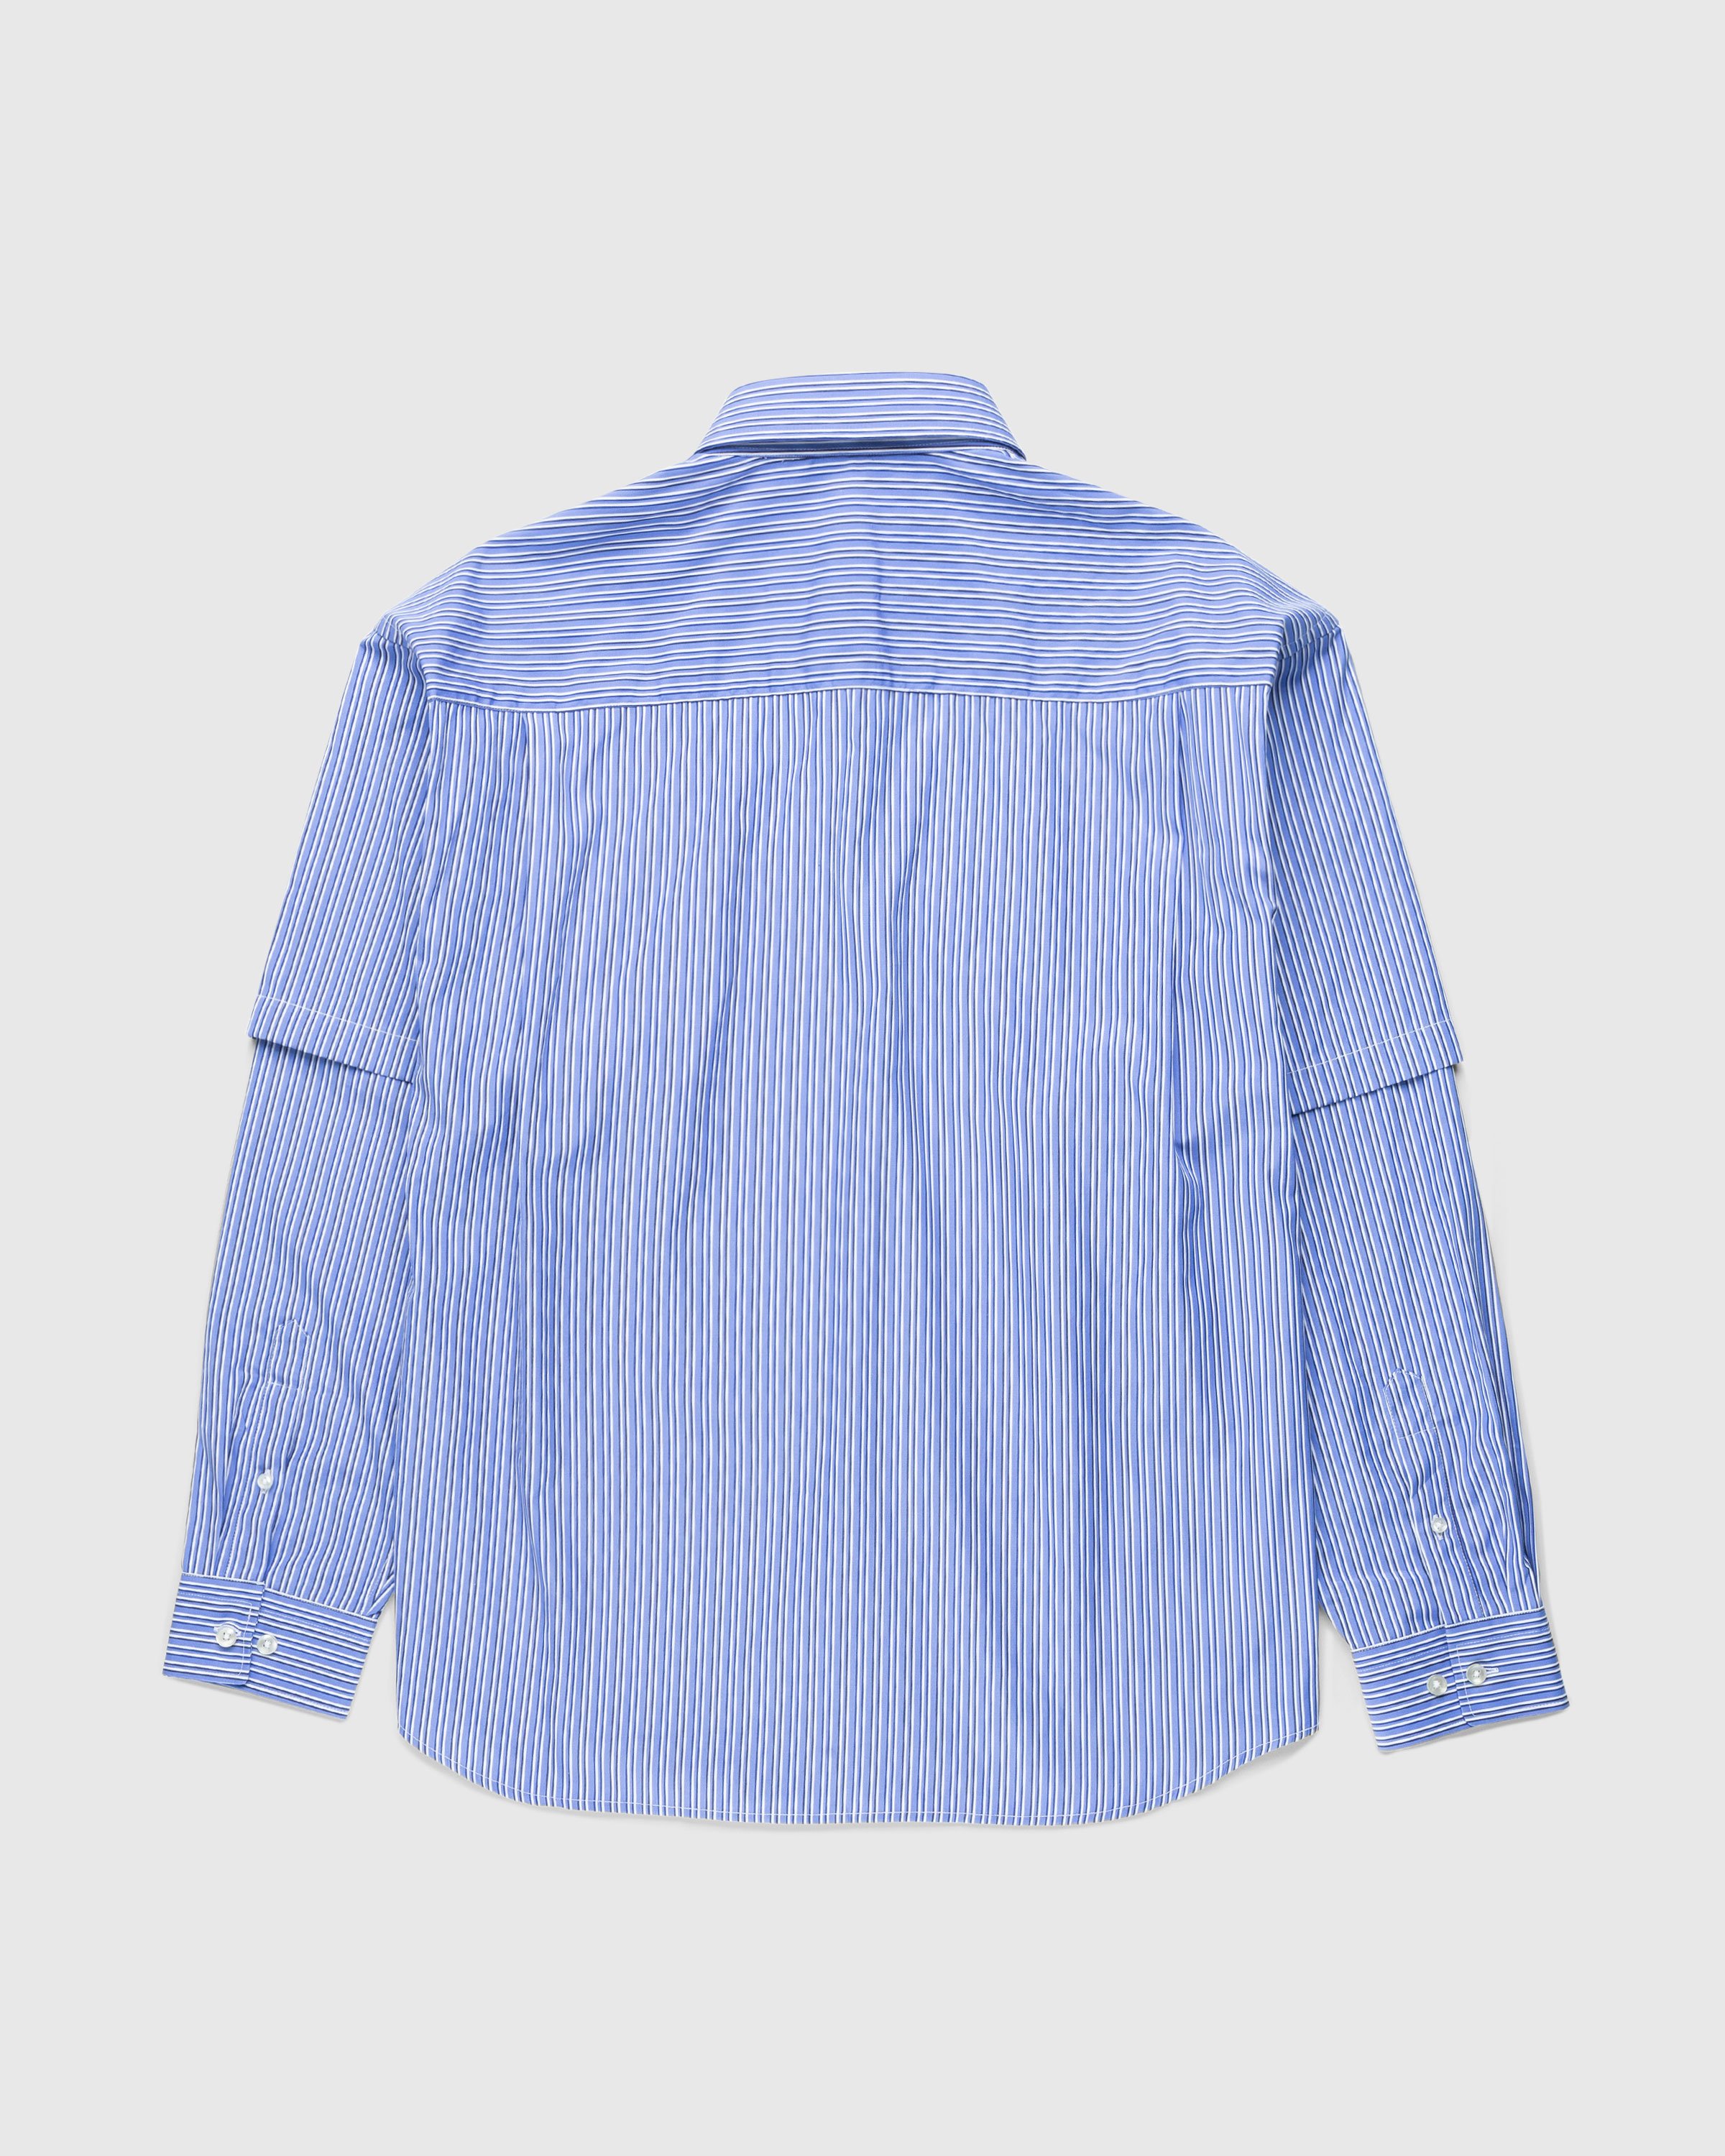 Highsnobiety x Le Père - "Neu York Neu York" Double Sleeve Shirt - Clothing - Blue - Image 2